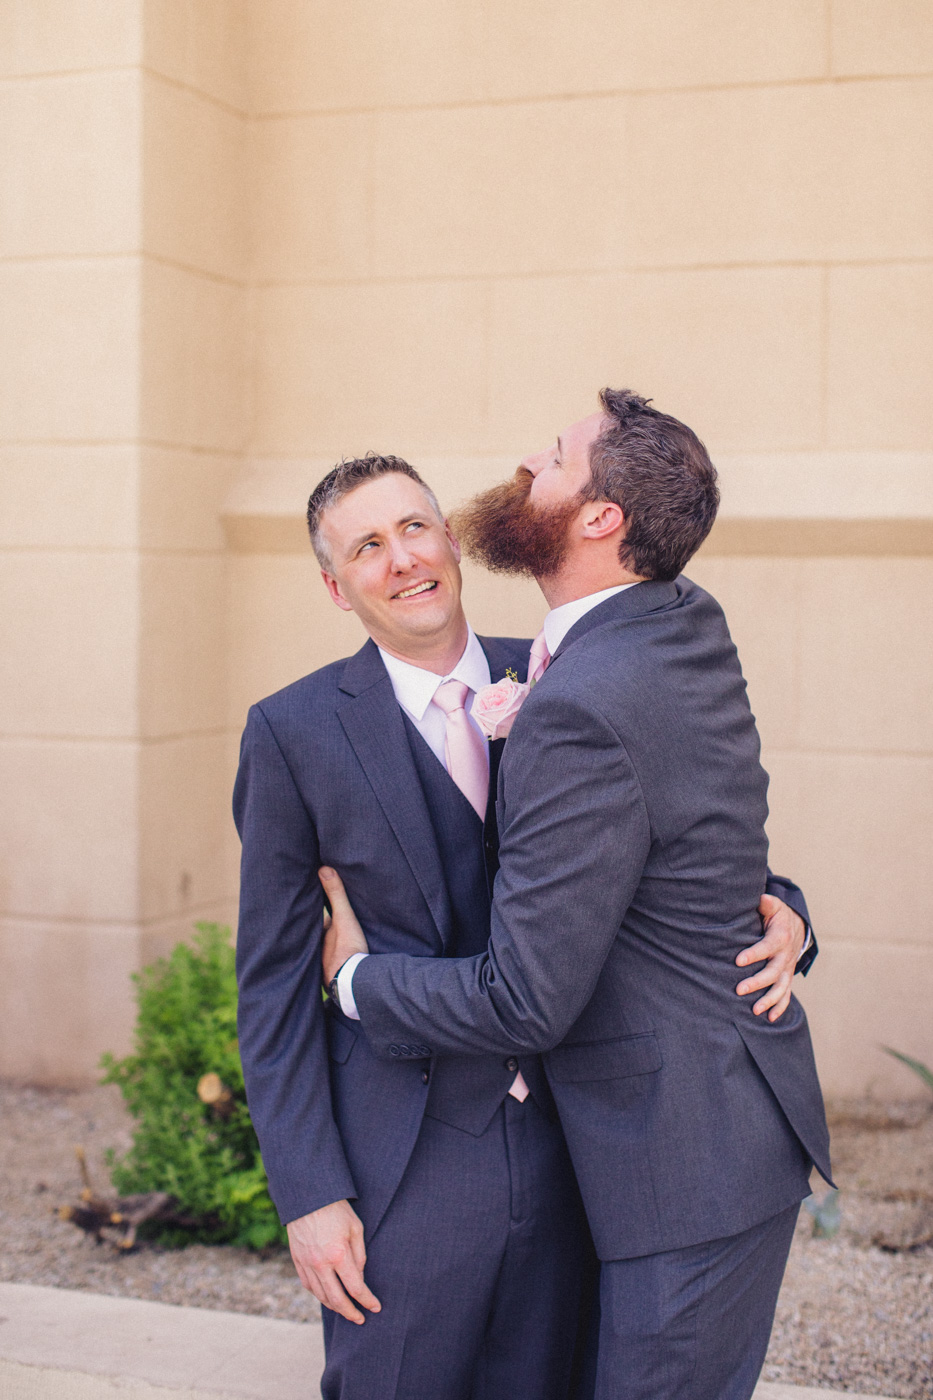 hilarious-groomsman-and-groom-photo